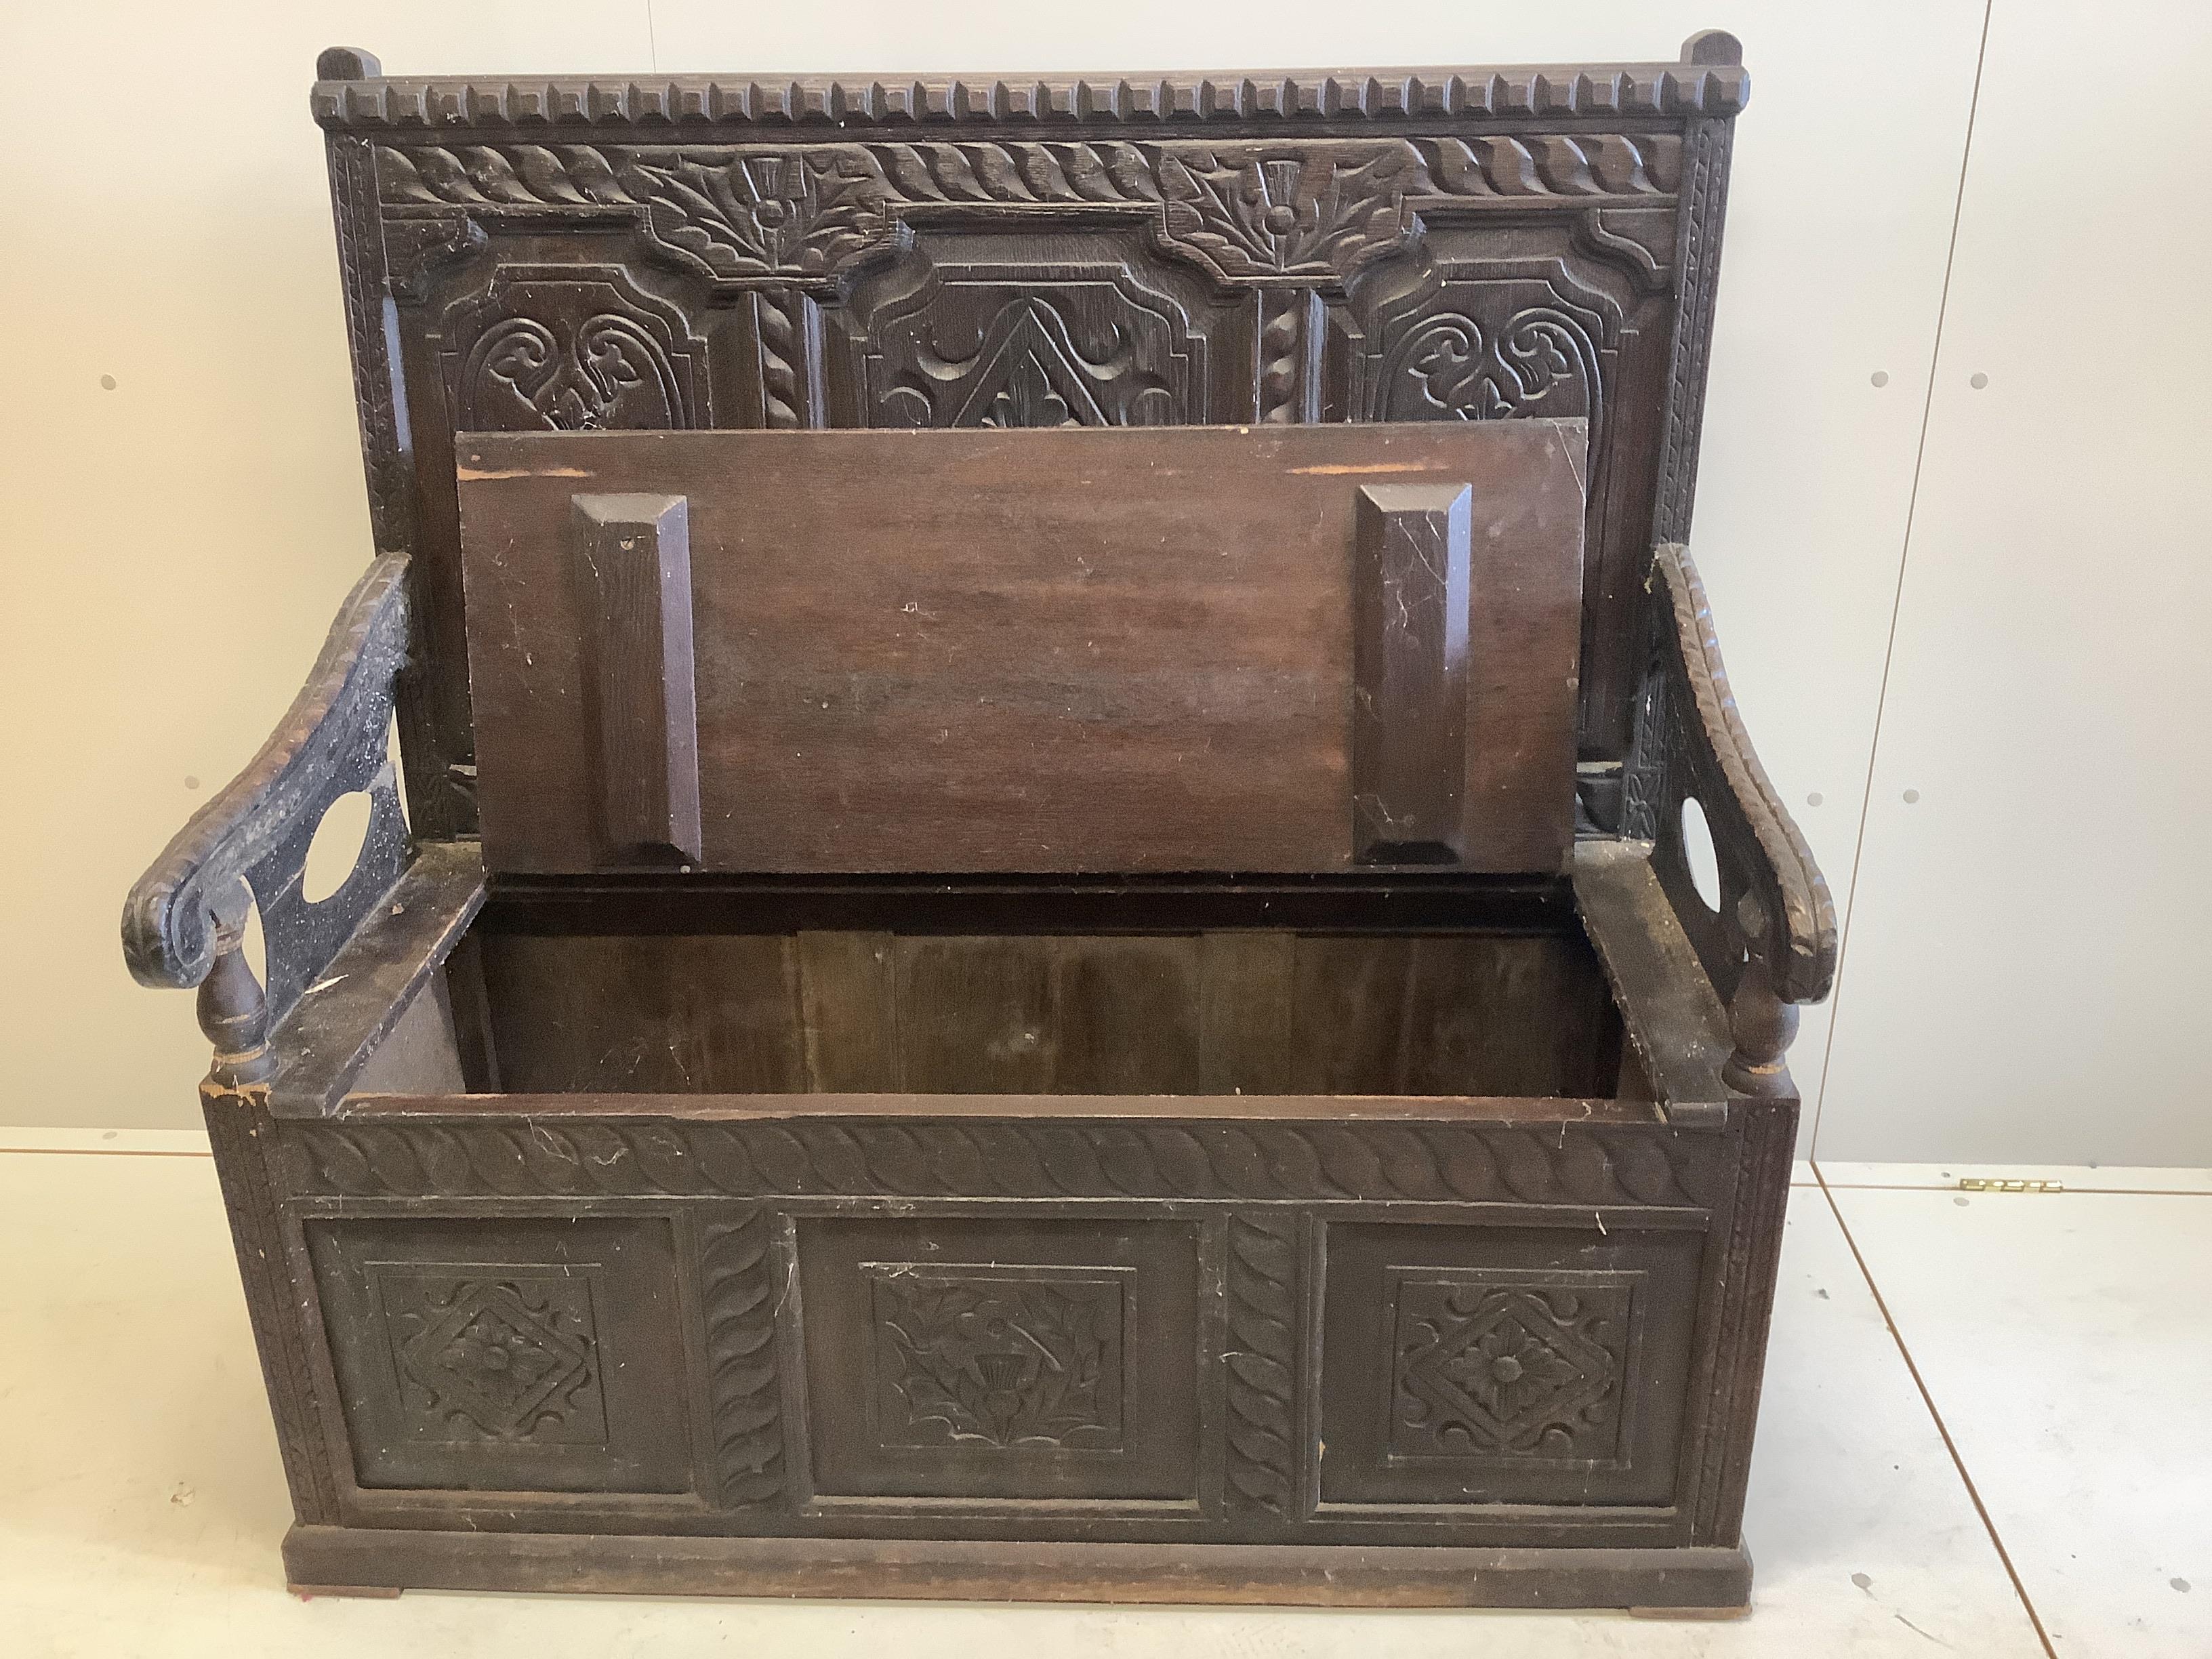 An early 20th century carved oak box seat settle, width 122cm, depth 56cm, height 121cm